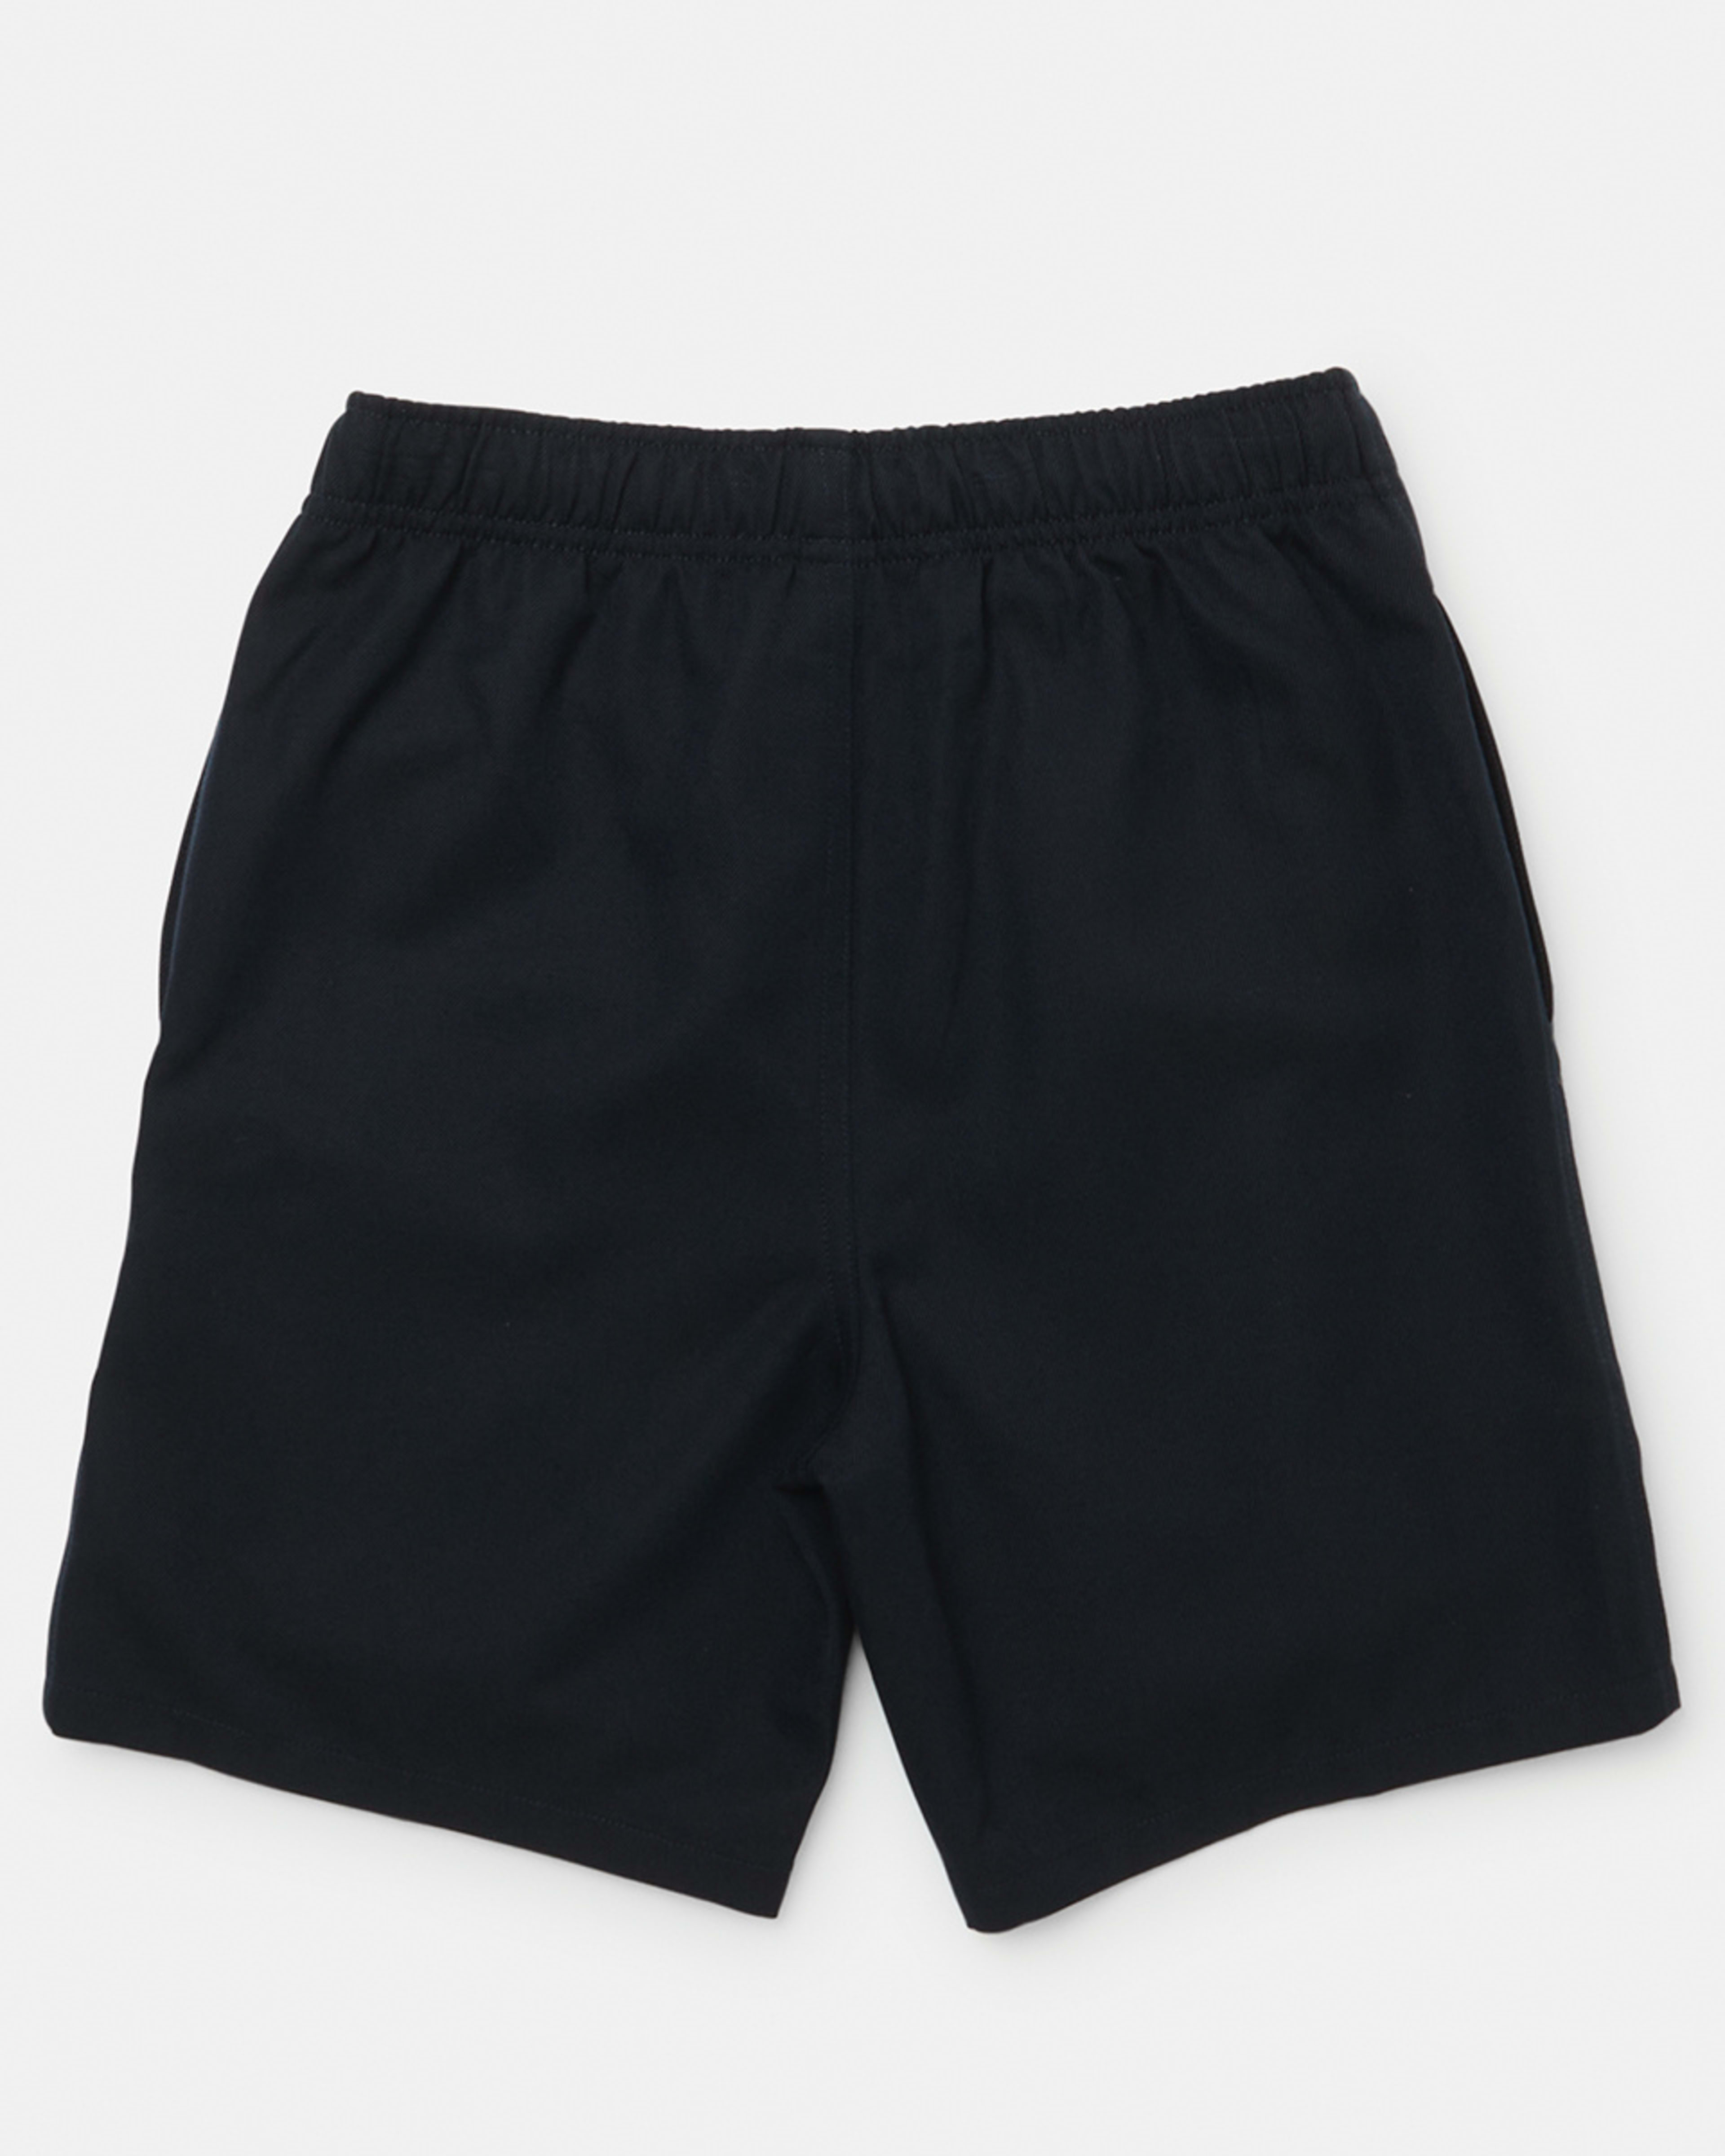 School Woven Shorts - Kmart